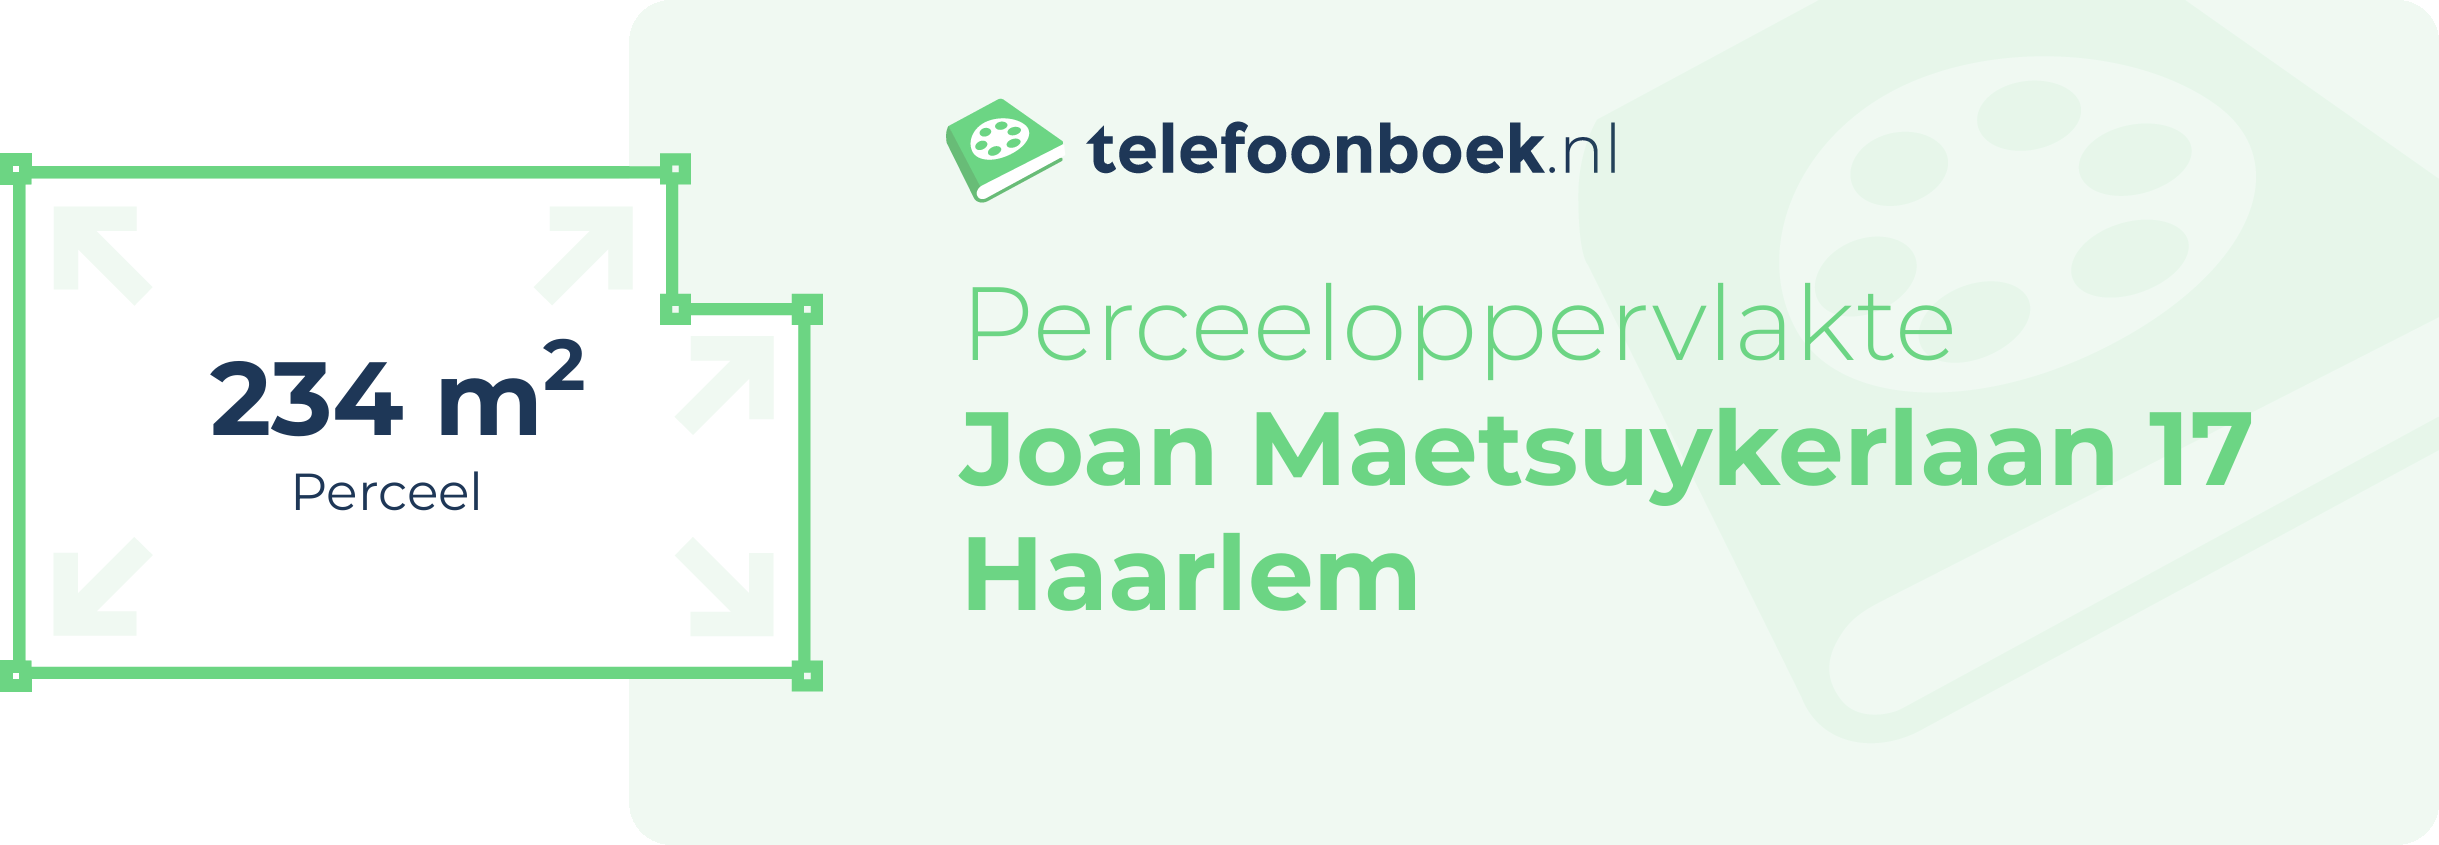 Perceeloppervlakte Joan Maetsuykerlaan 17 Haarlem